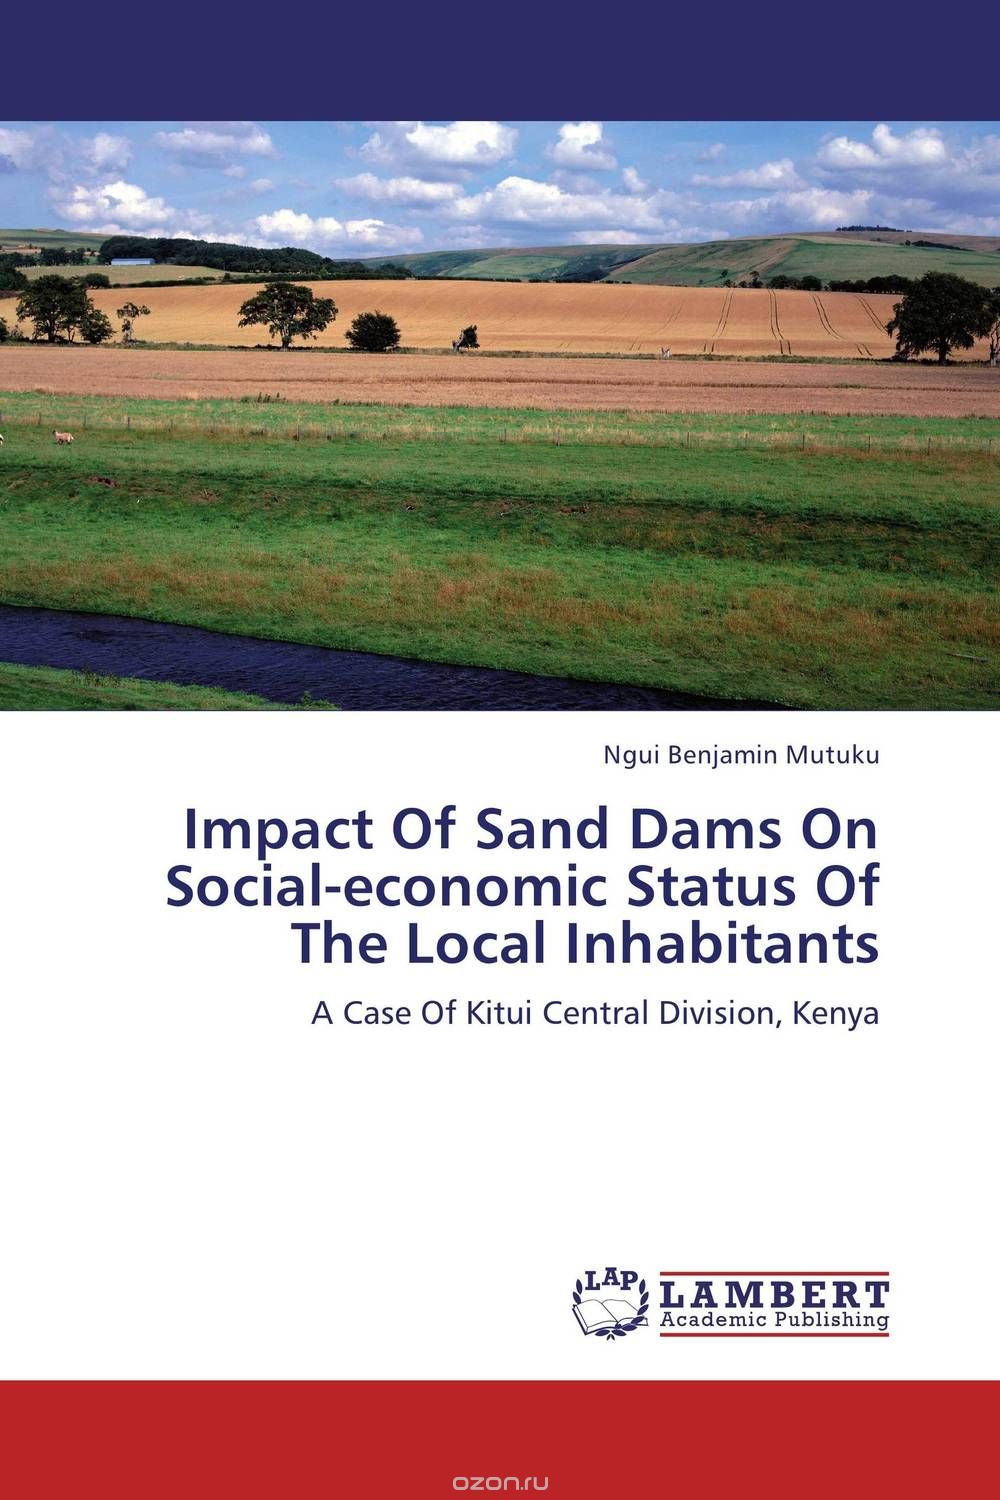 Скачать книгу "Impact Of Sand Dams On Social-economic Status Of The Local Inhabitants"